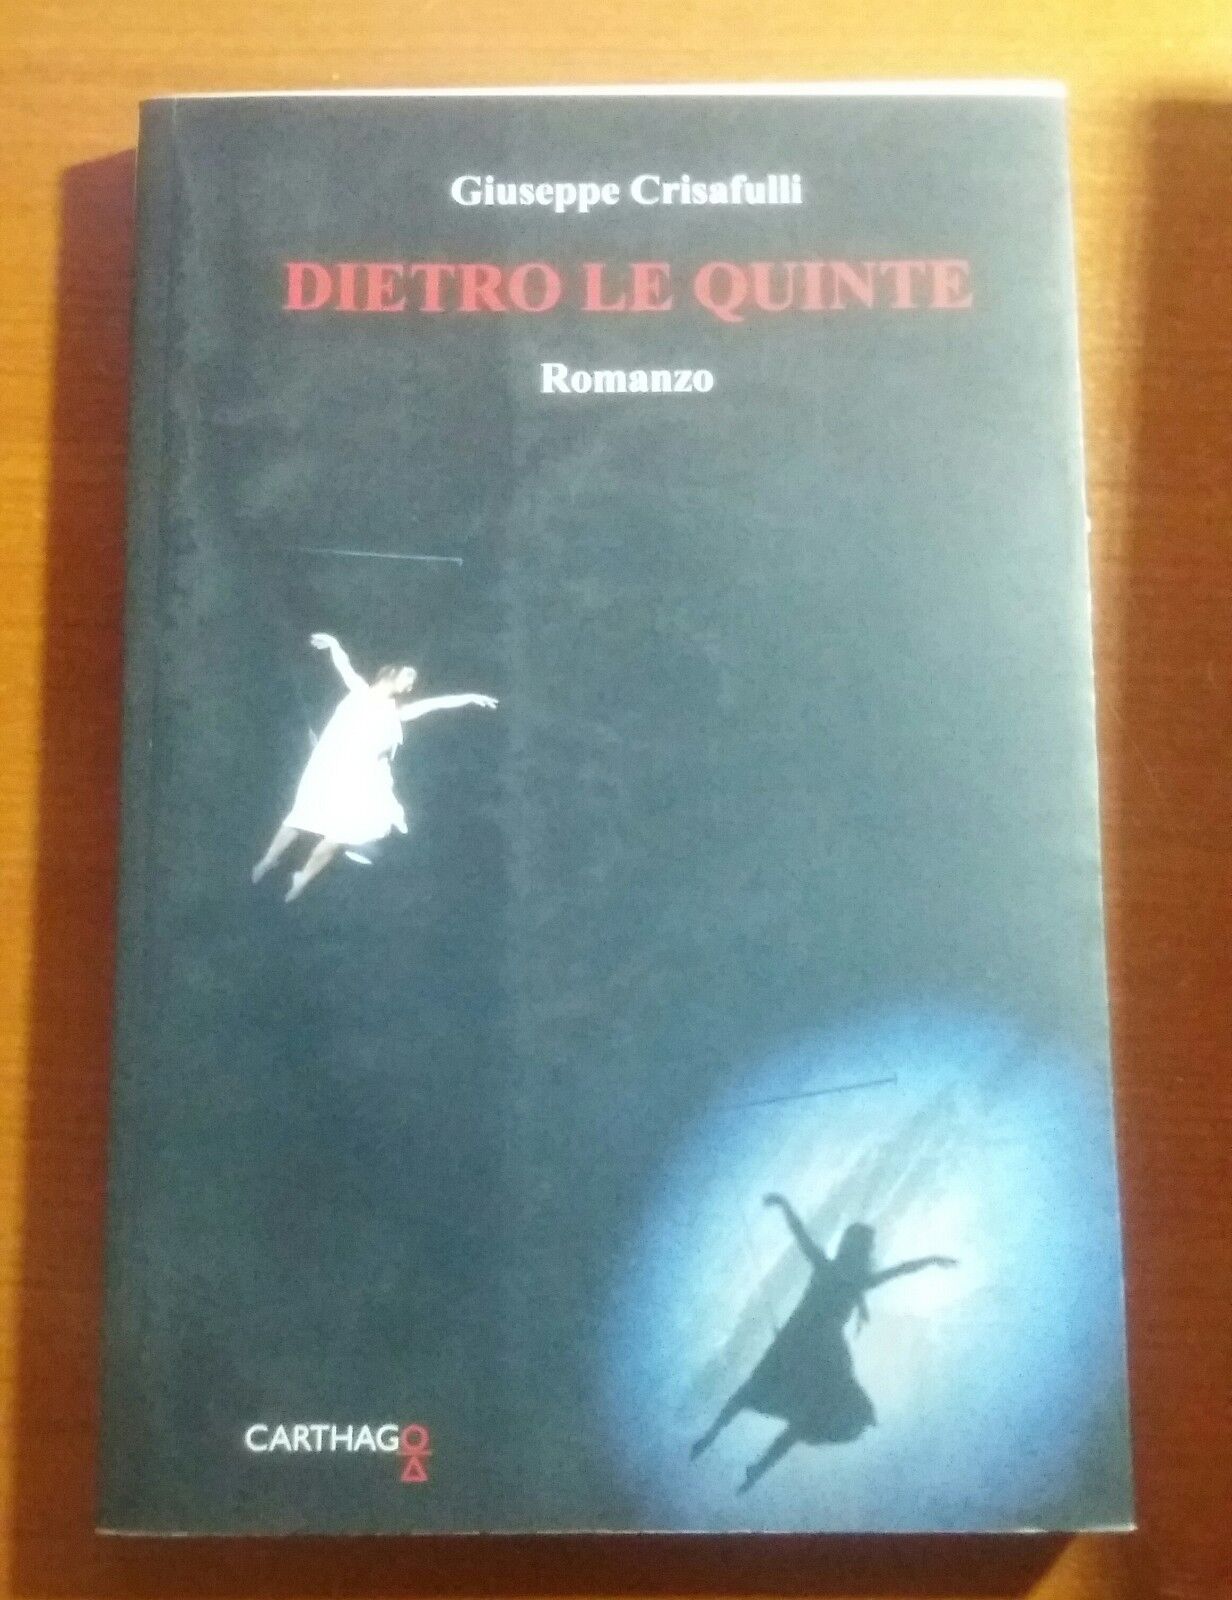 Dietro le quinte - Giuseppe Crisafulli - Carthago - 2014 - M (Autografato)